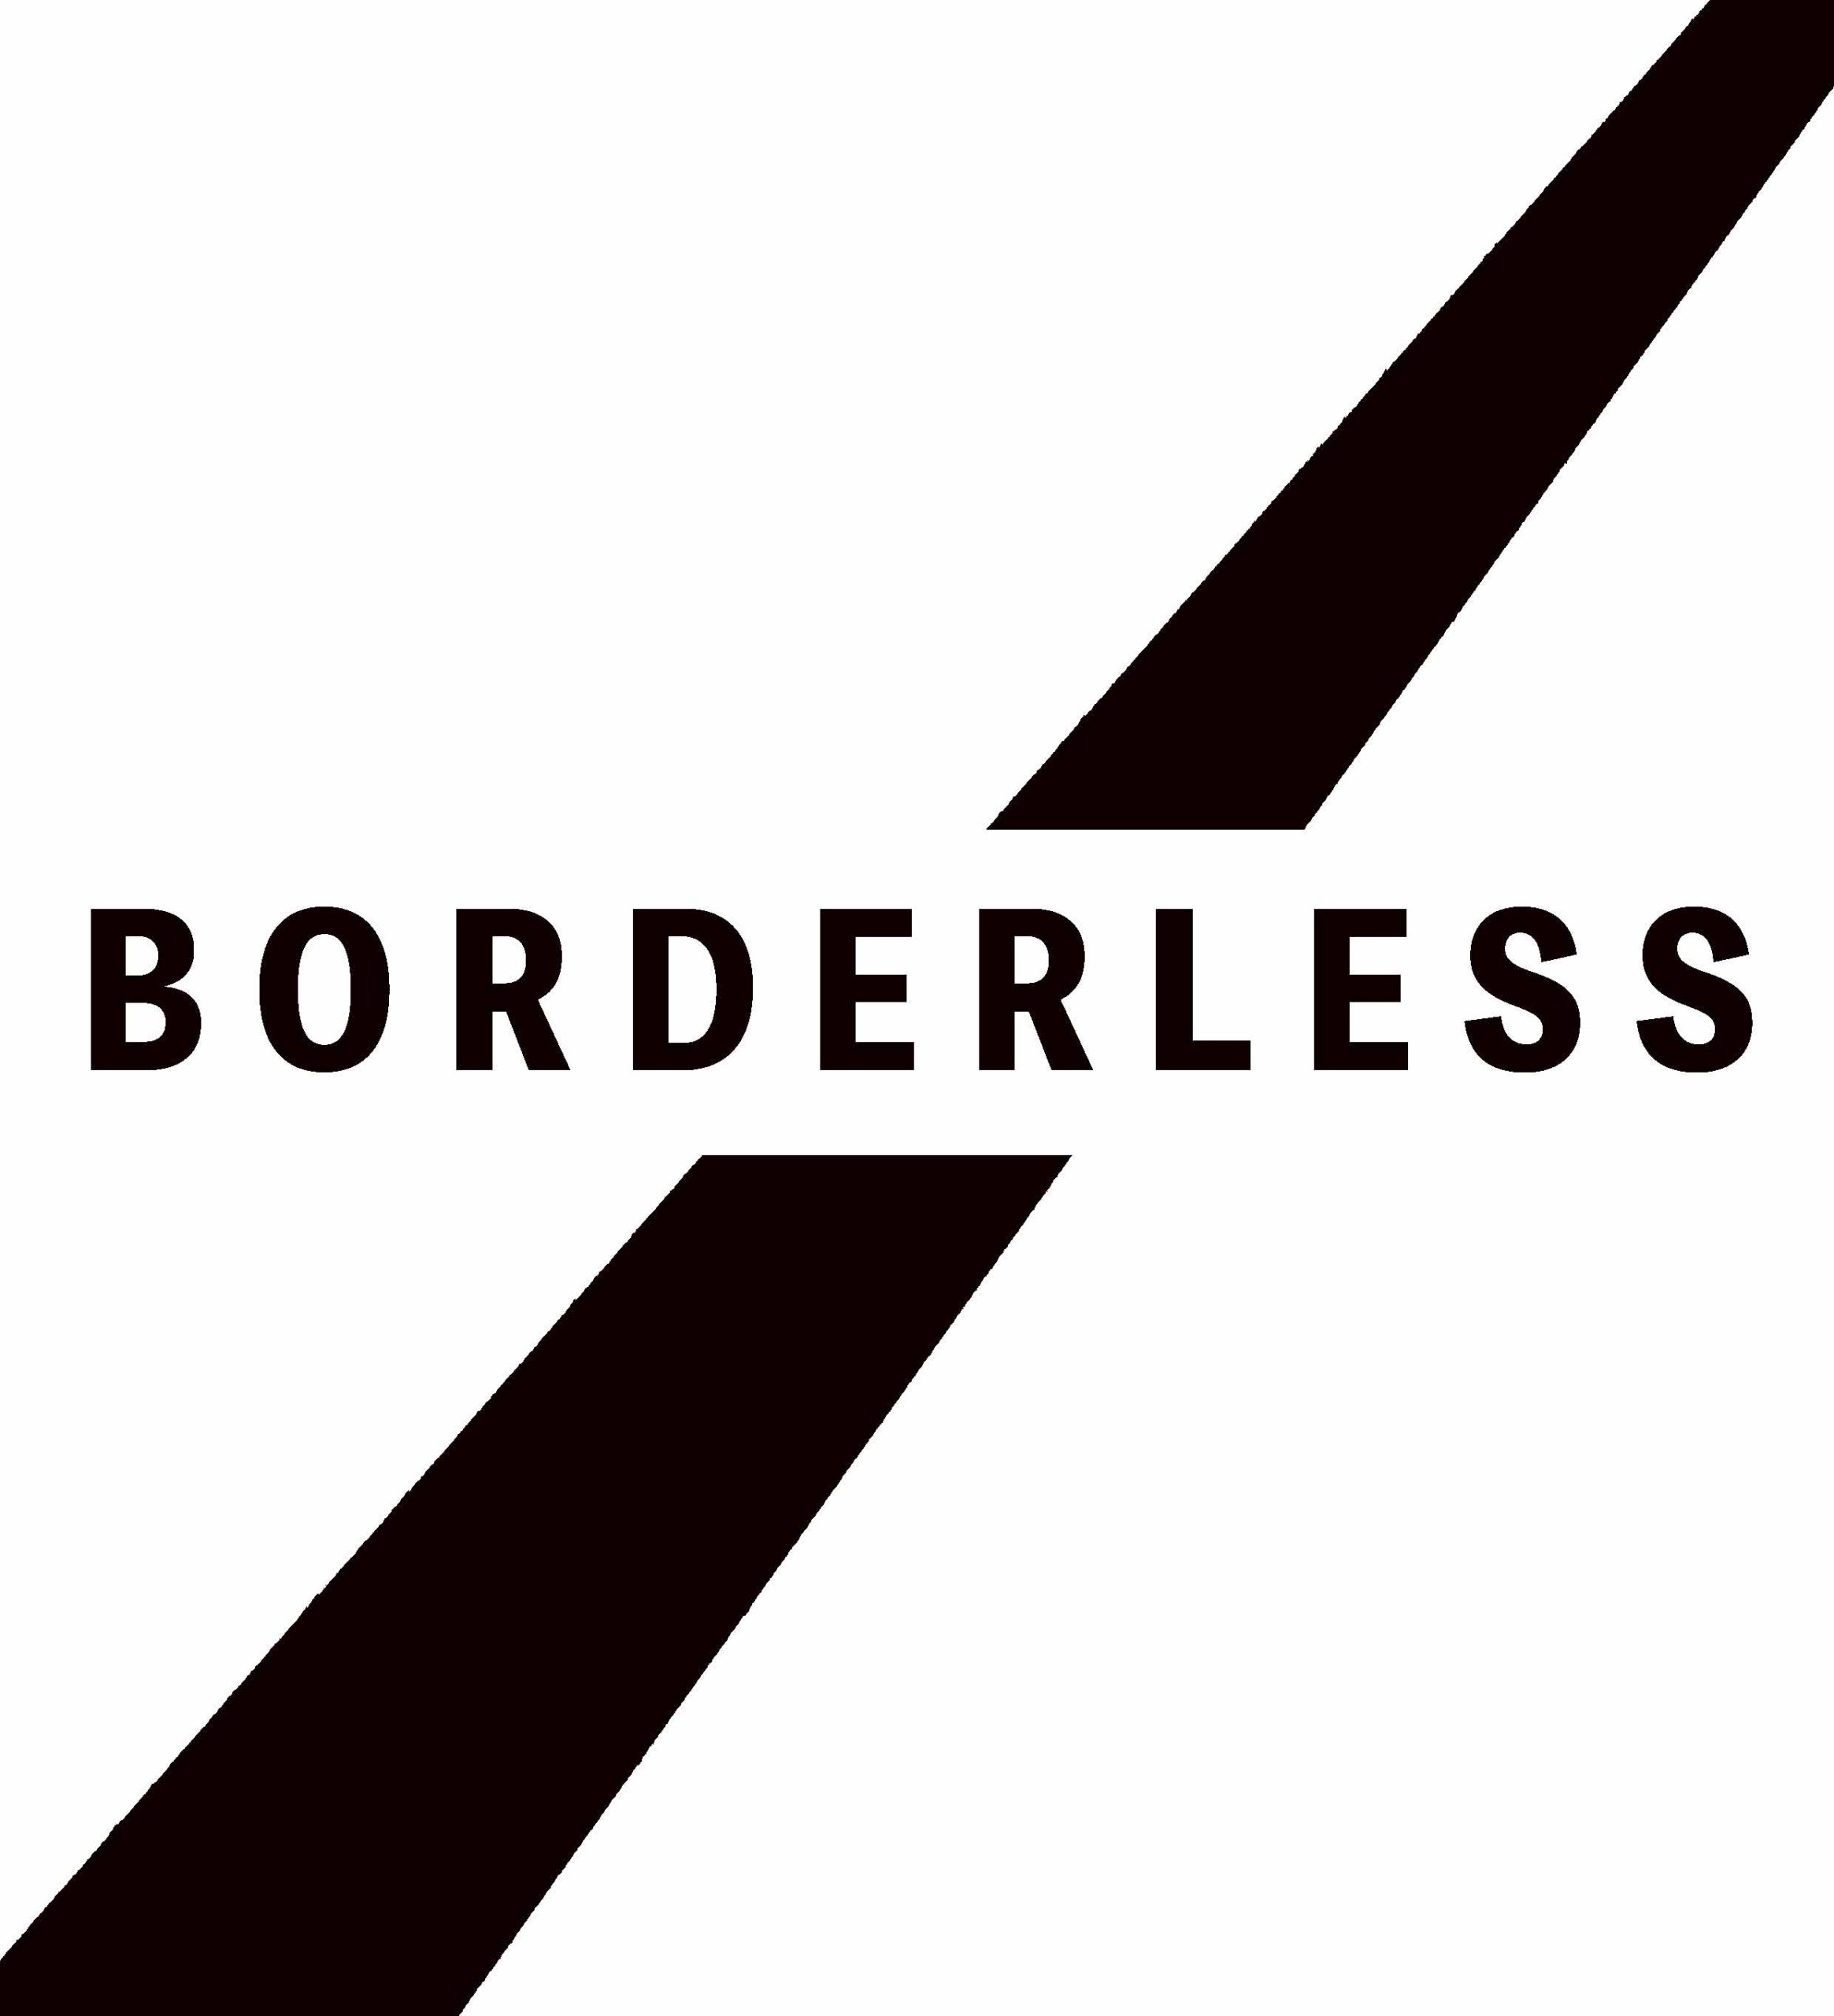 Borderless consulting